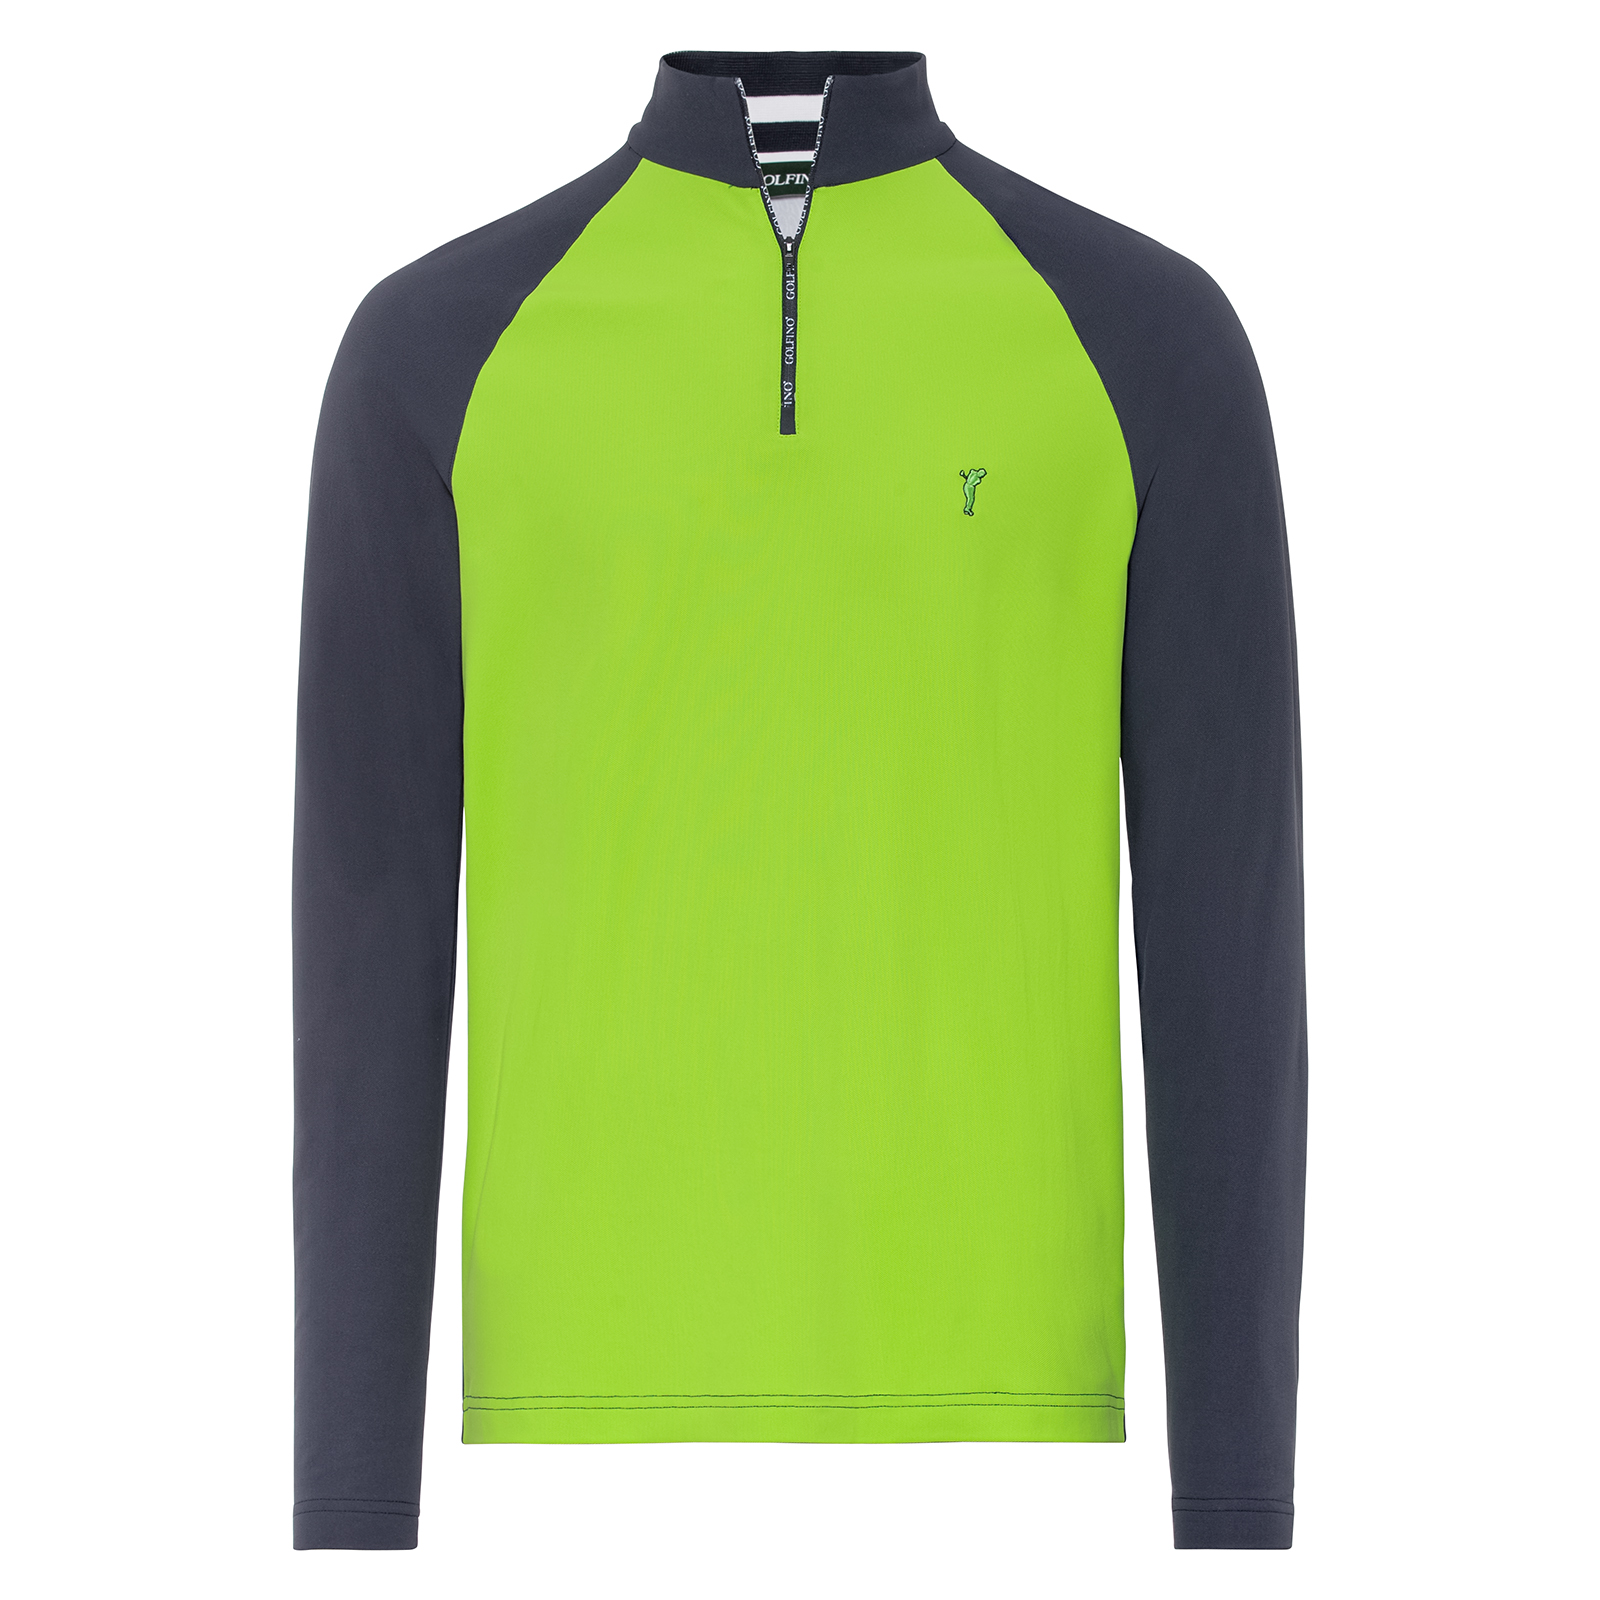 Men’s functional half-zip golf sweater in colour blocking design